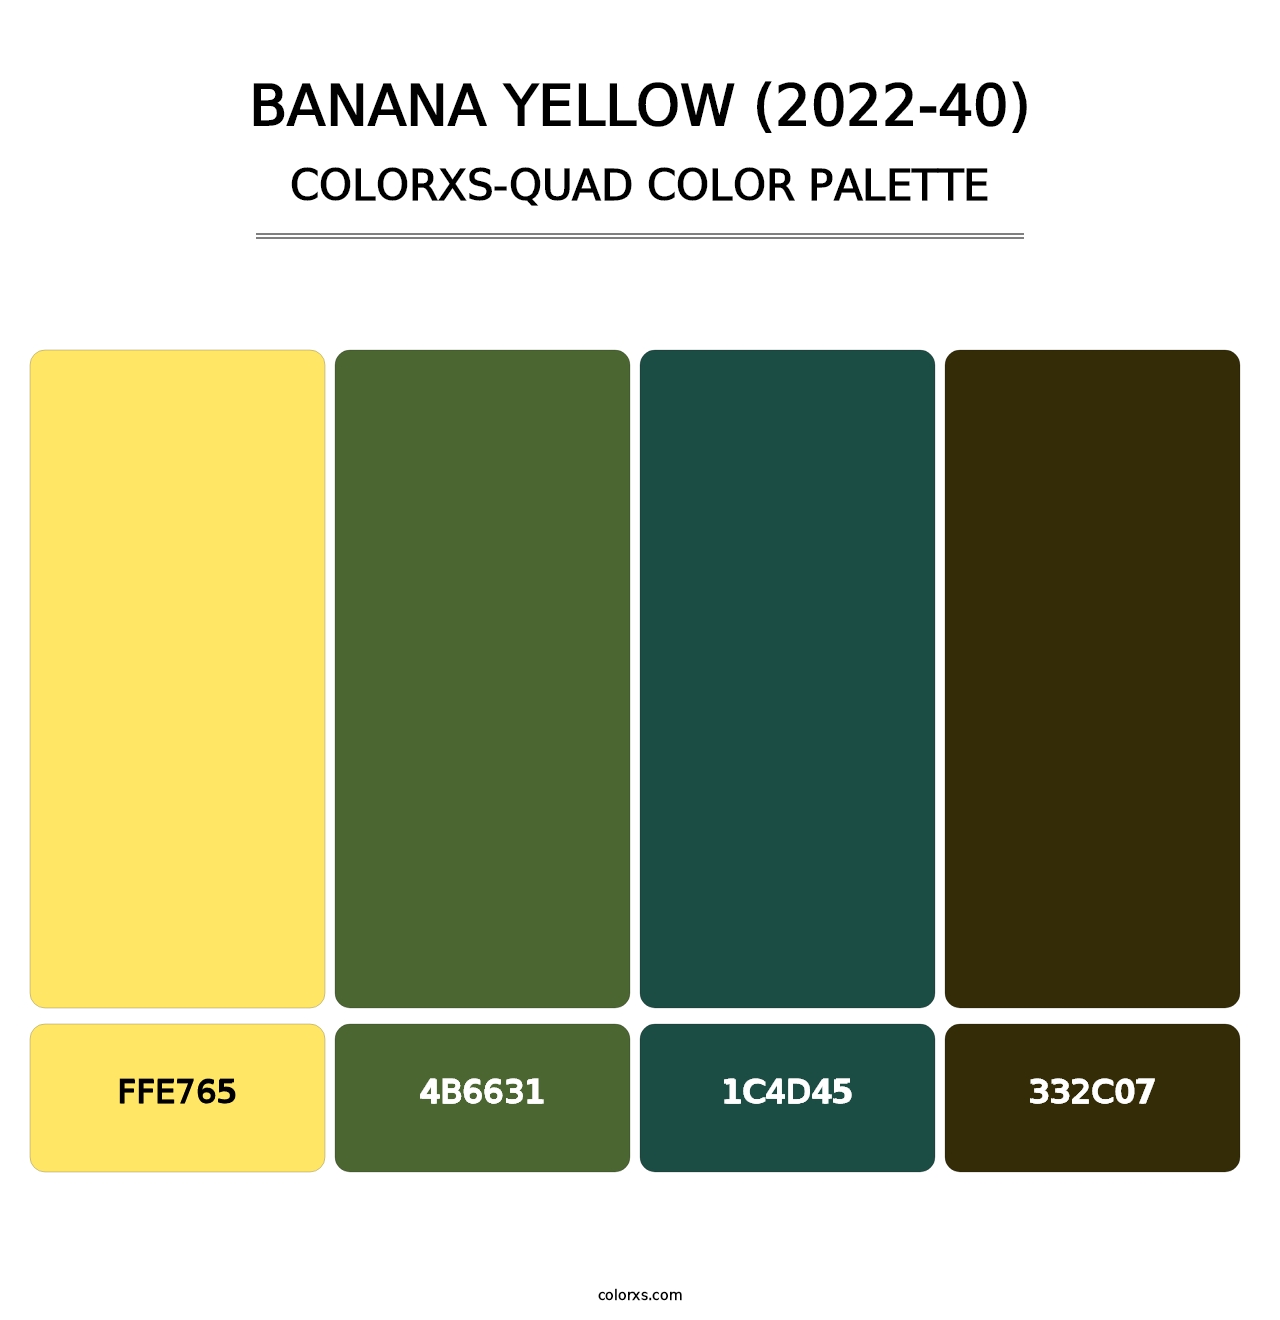 Banana Yellow (2022-40) - Colorxs Quad Palette